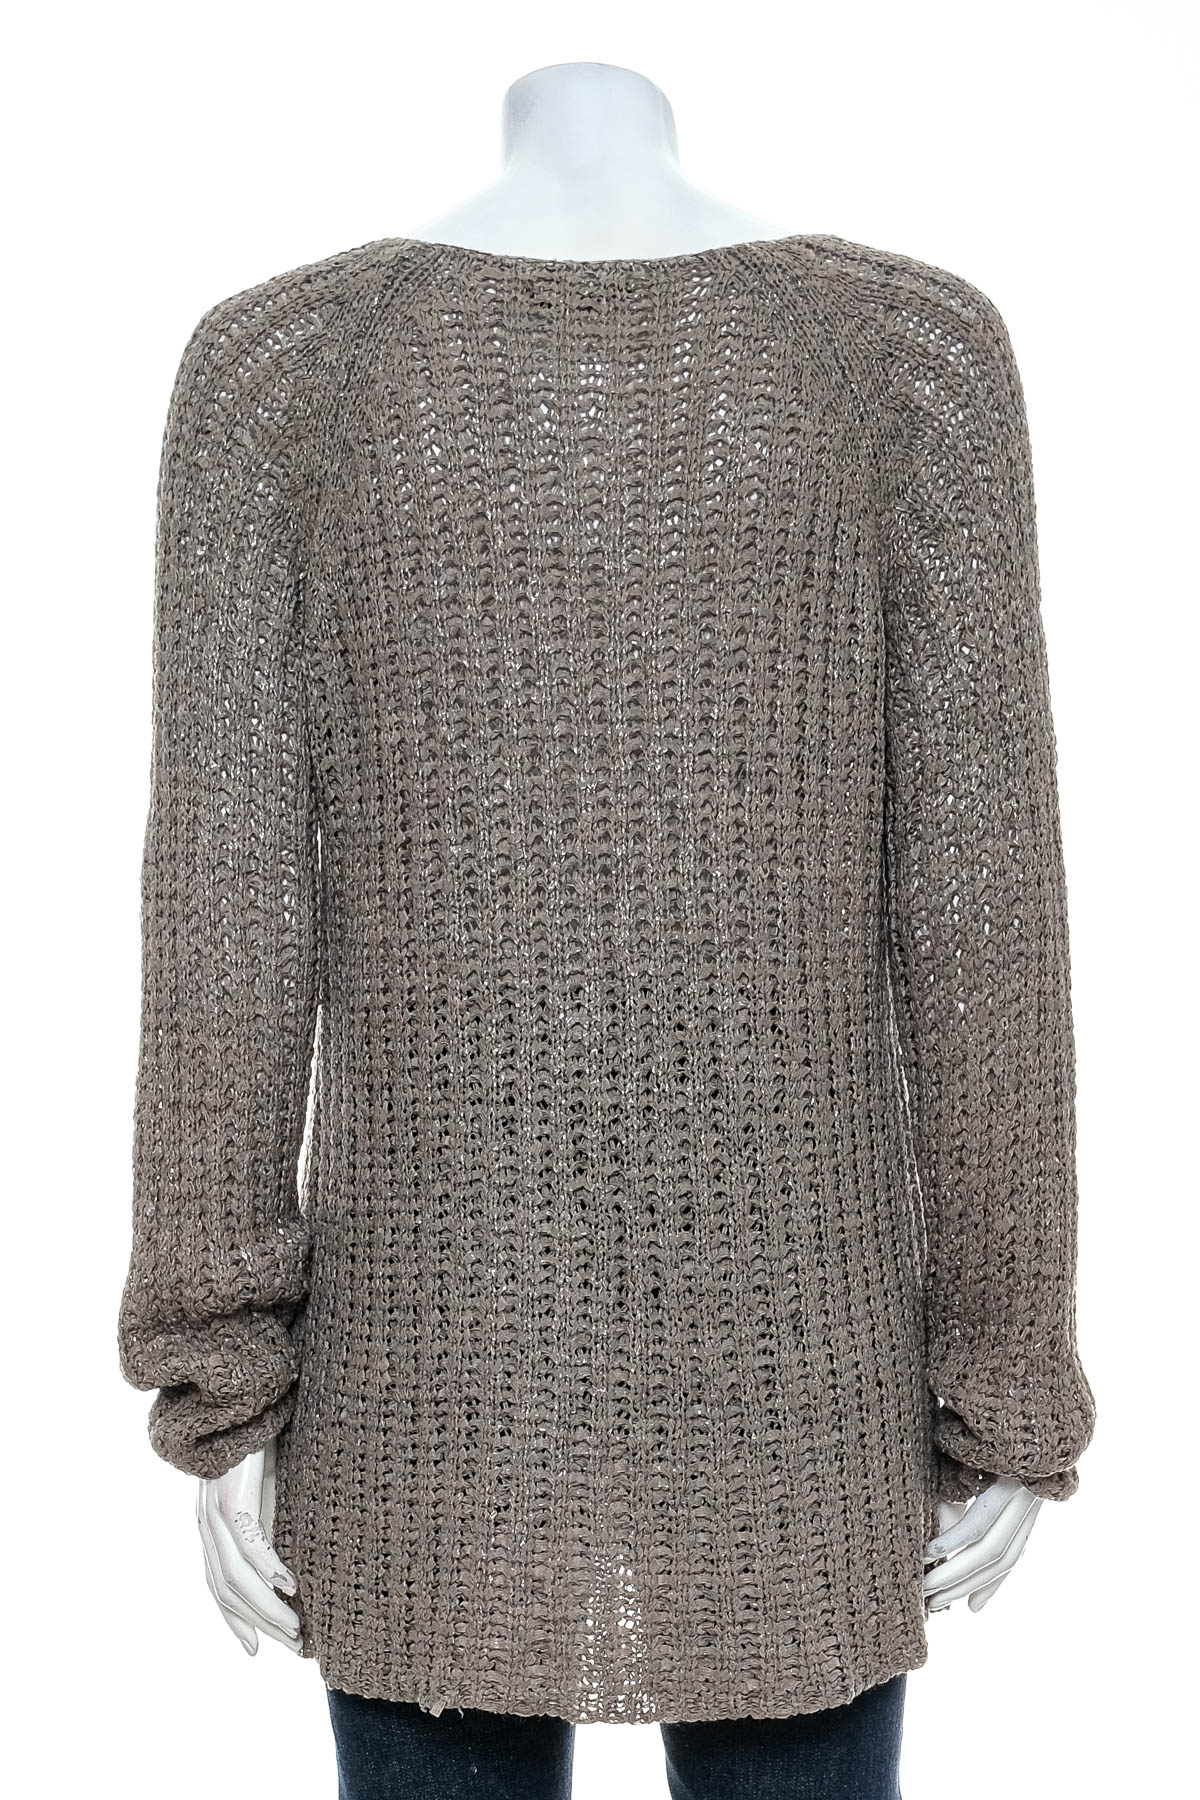 Women's sweater - Marc Aurel - 1